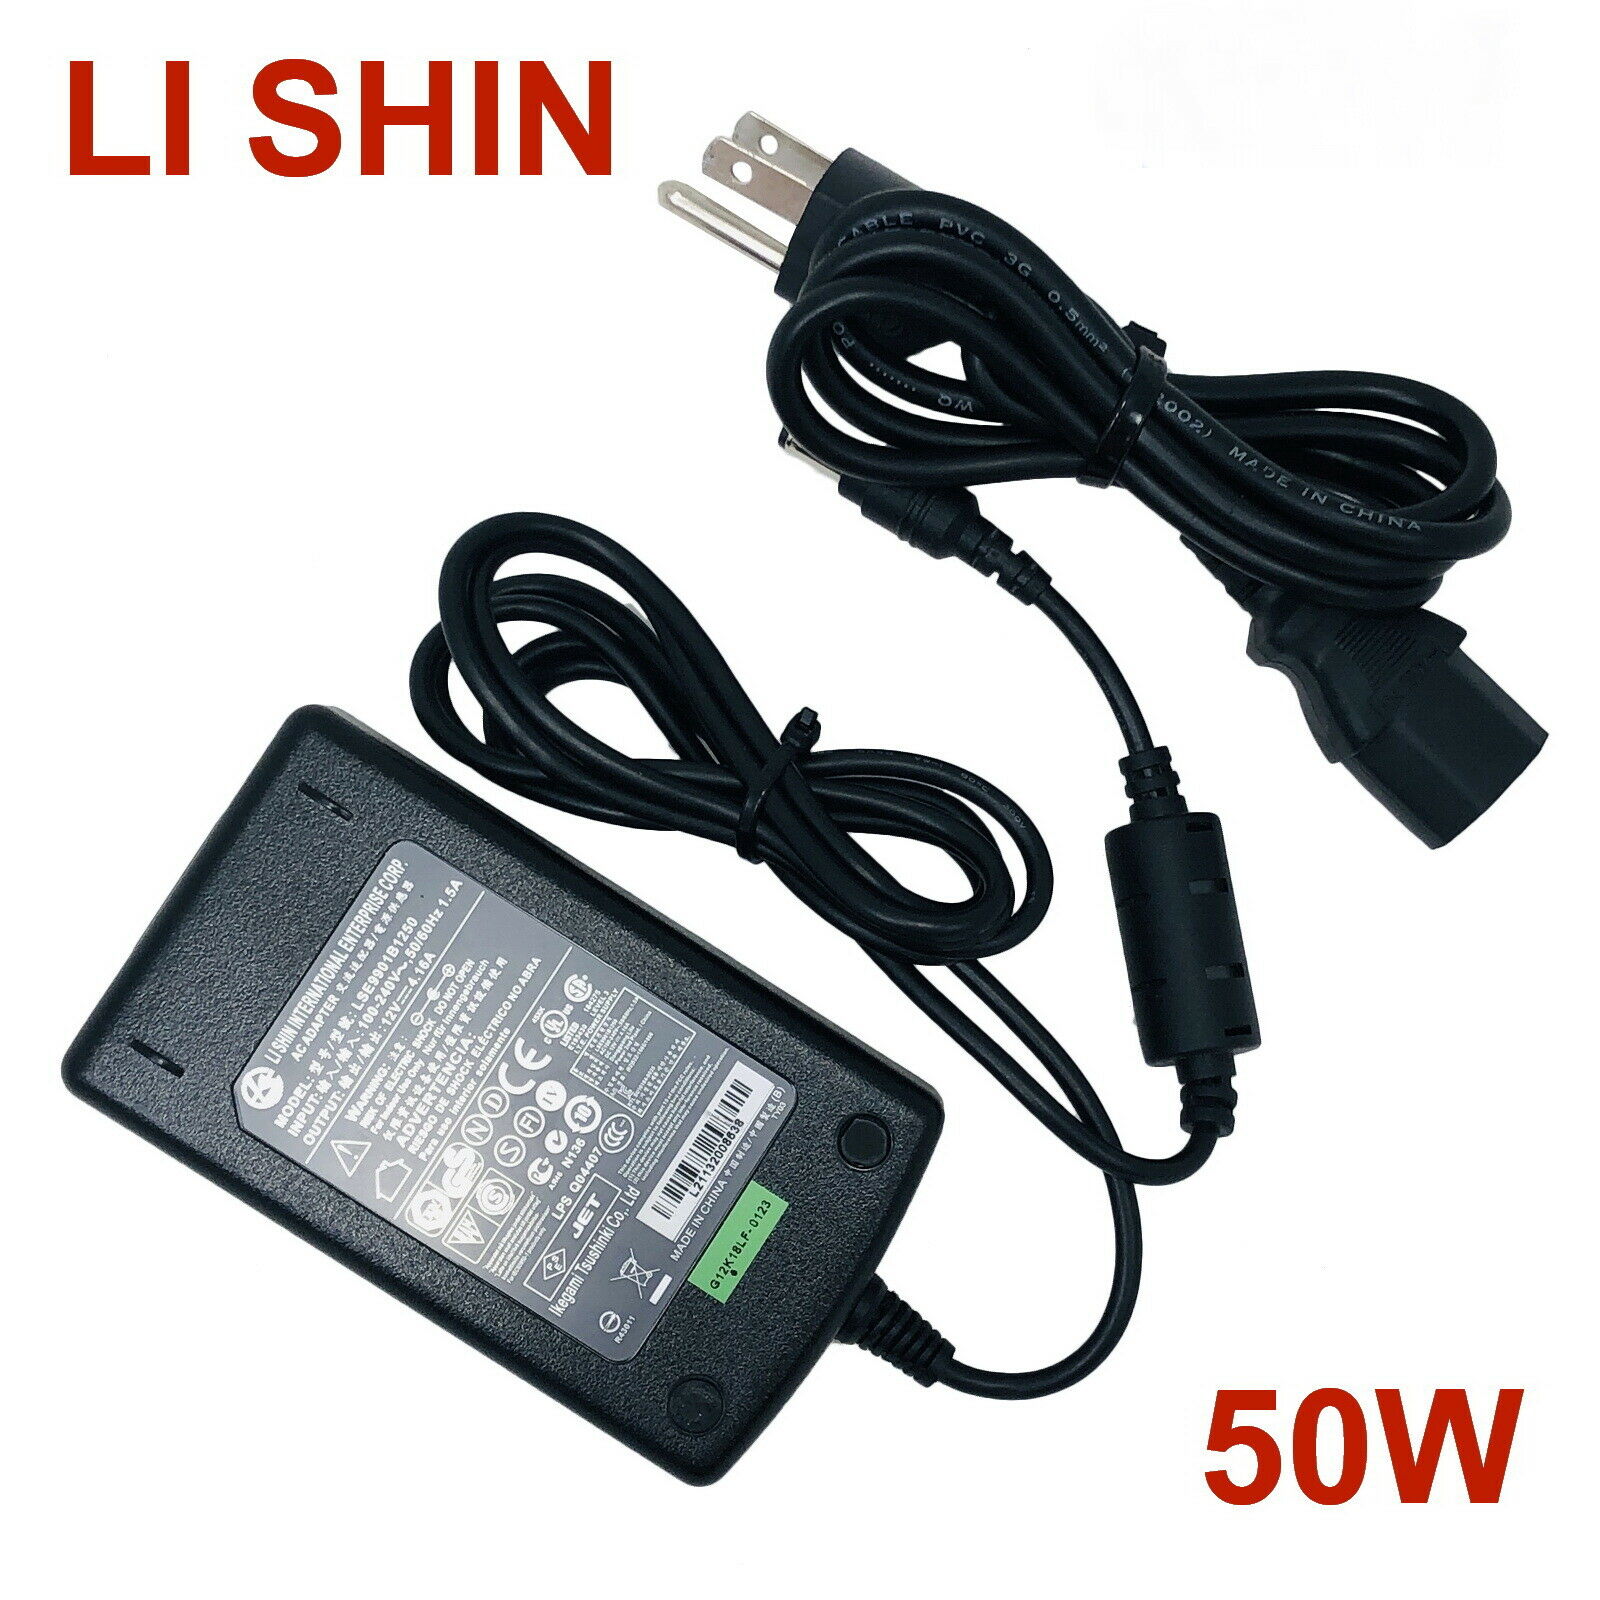 *Brand NEW*Genuine LI SHIN LSE9901B1250 12V 4.16A 50W W/Cord AC Adapter Power Supply